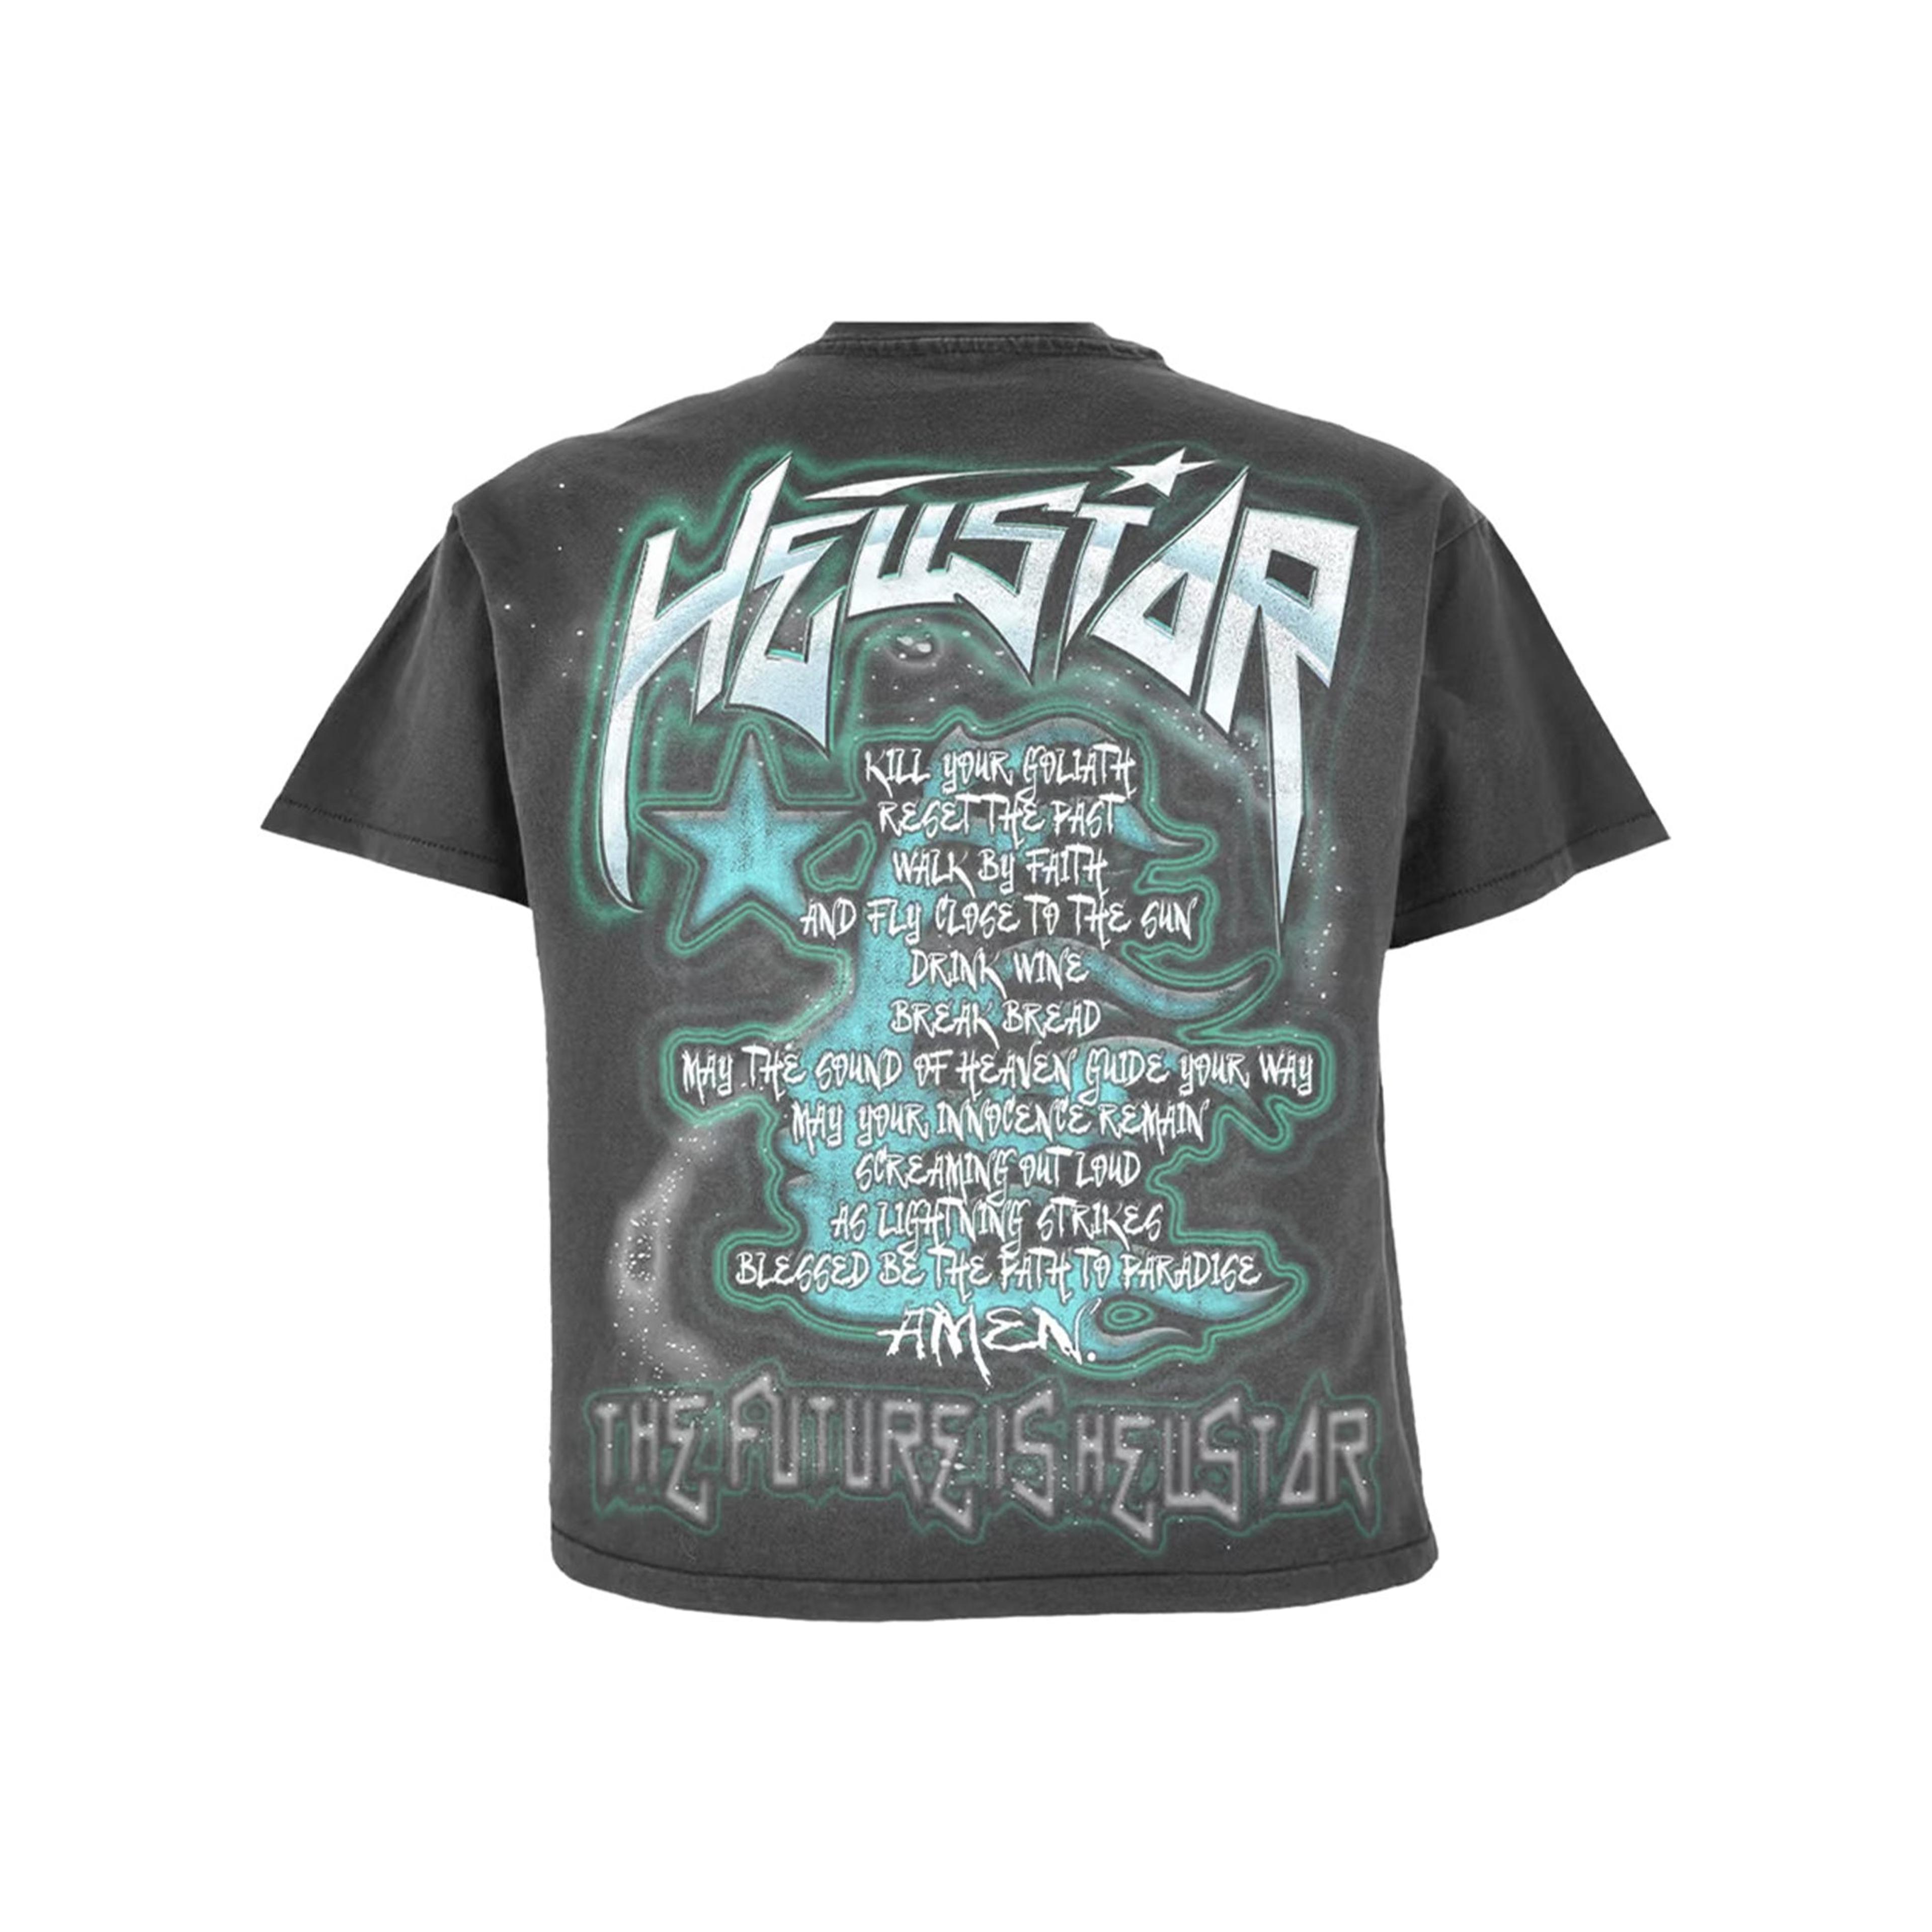 Alternate View 1 of Hellstar The Future T-Shirt